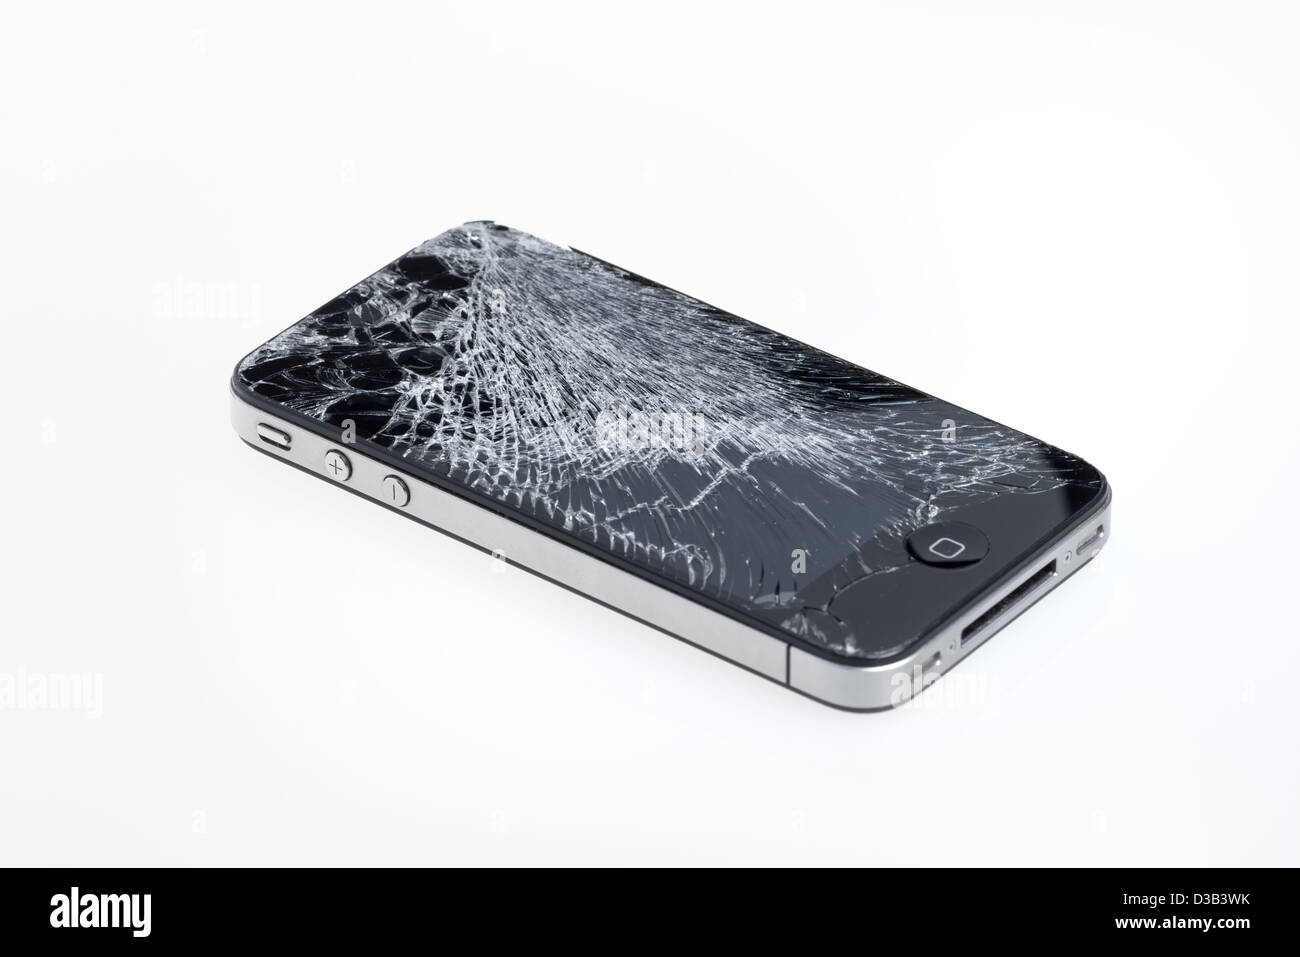 Das alte Apple iPhone 4 mit gebrochenen Bildschirm, Studio gedreht. Stockfoto